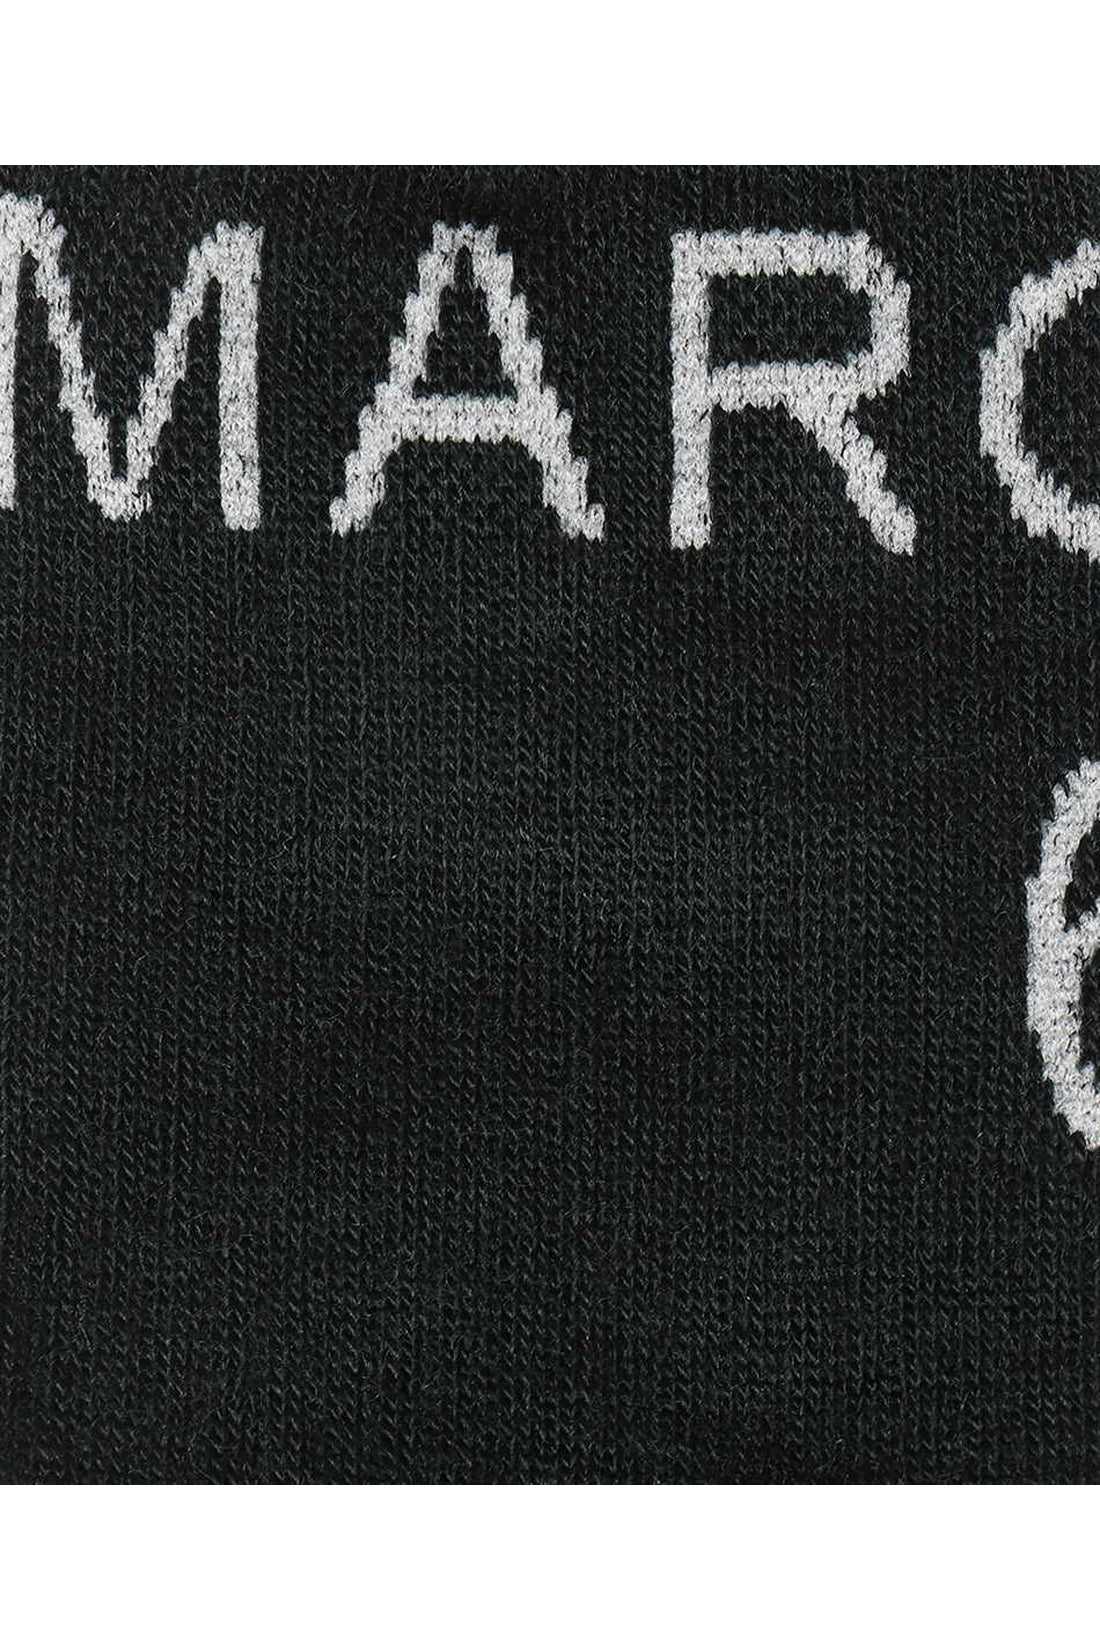 MM6 Maison Margiela-OUTLET-SALE-Wool-blend socks-ARCHIVIST